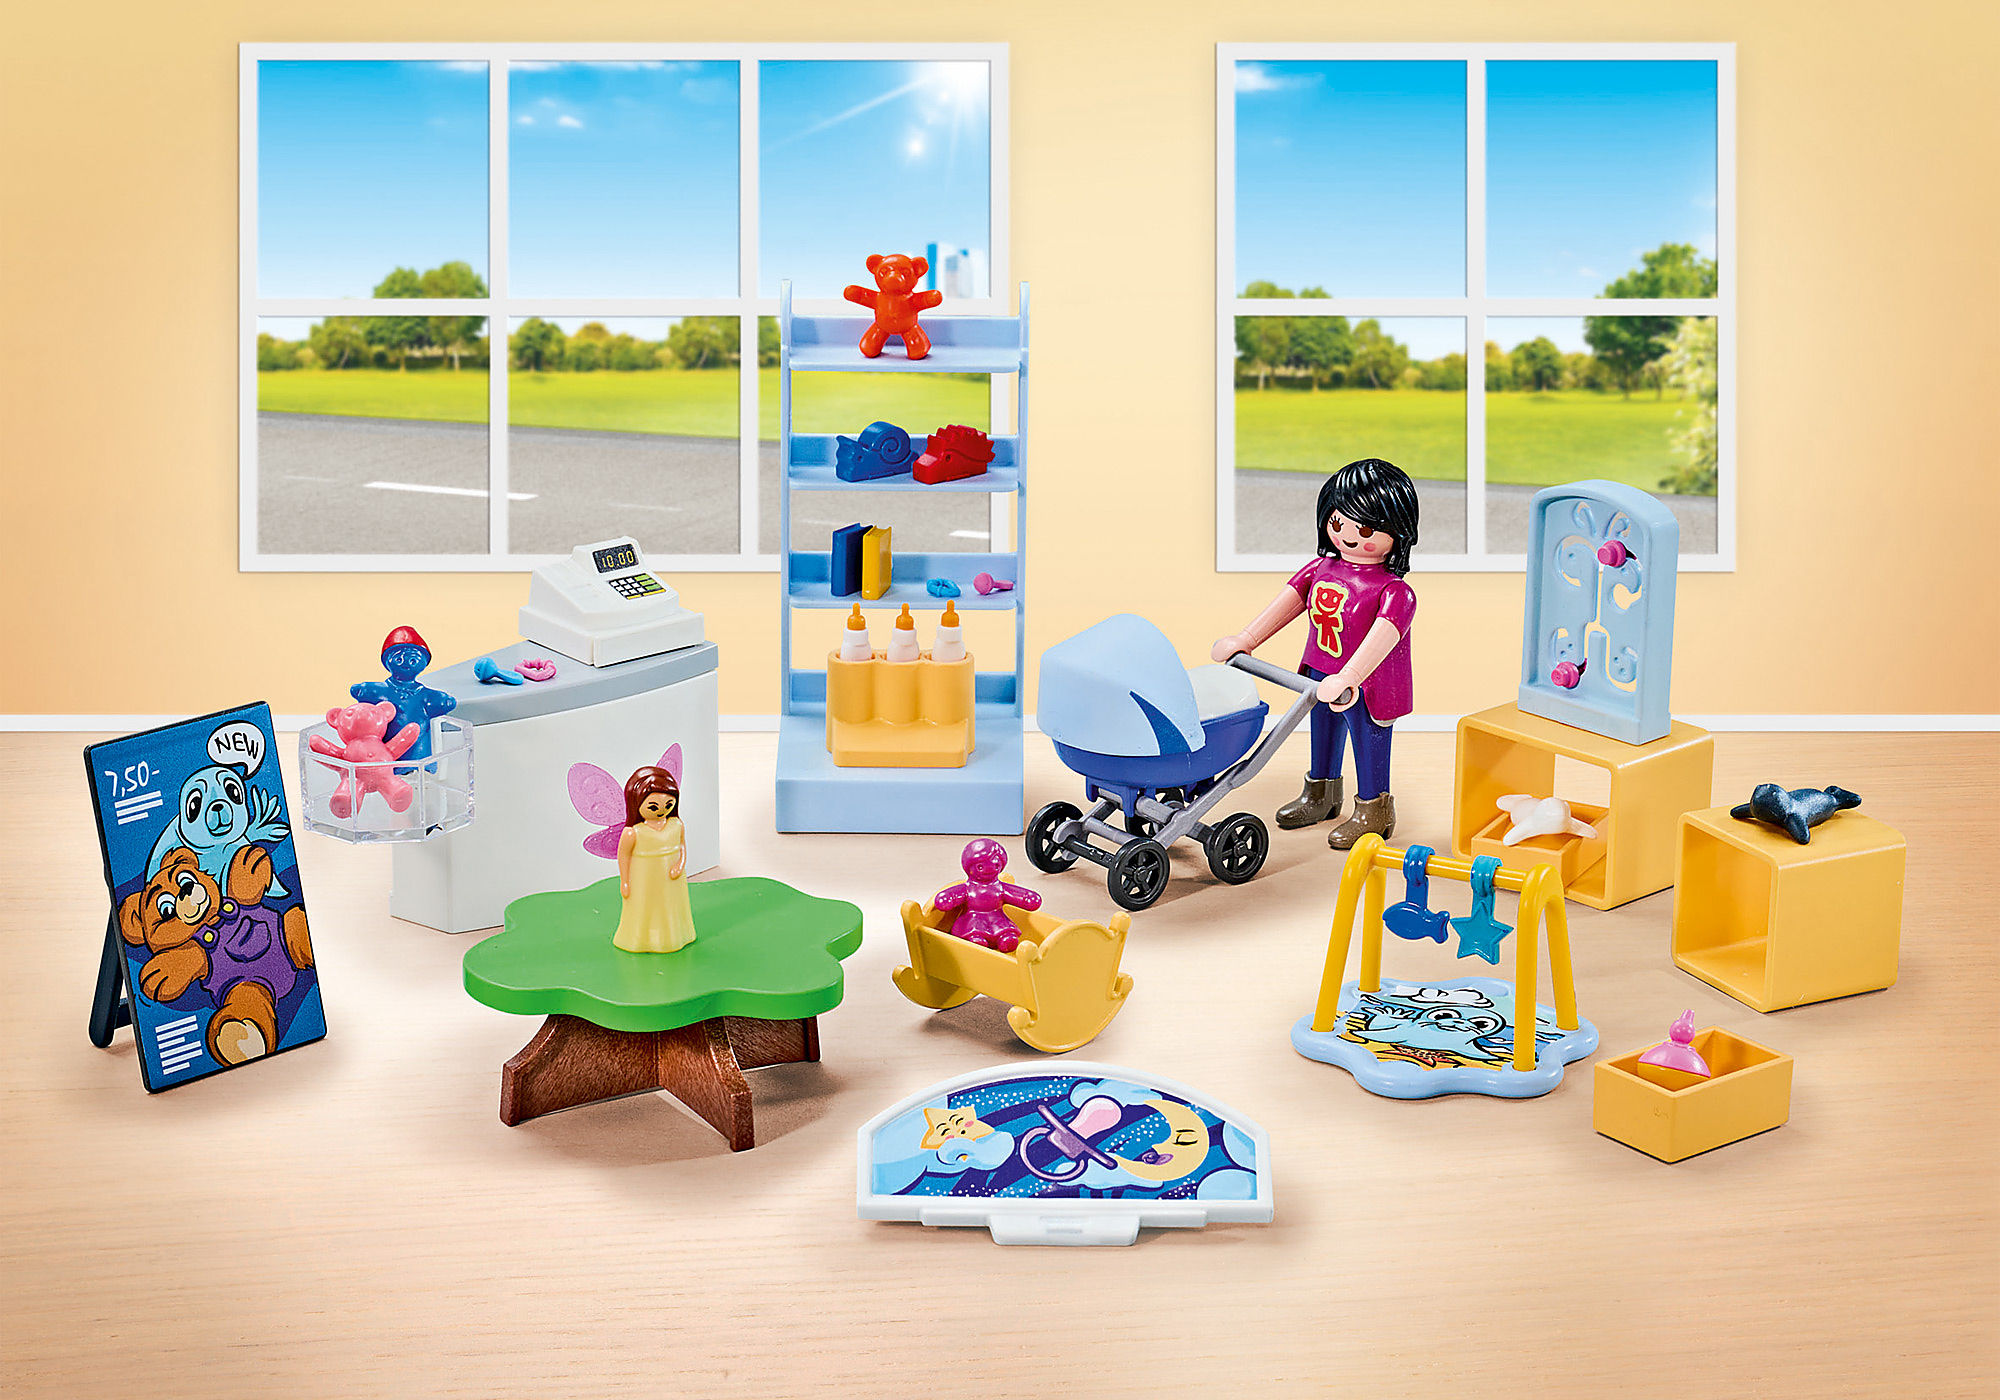 playmobil bebe, niños niñas casa jardin infante - Acheter Playmobil sur  todocoleccion